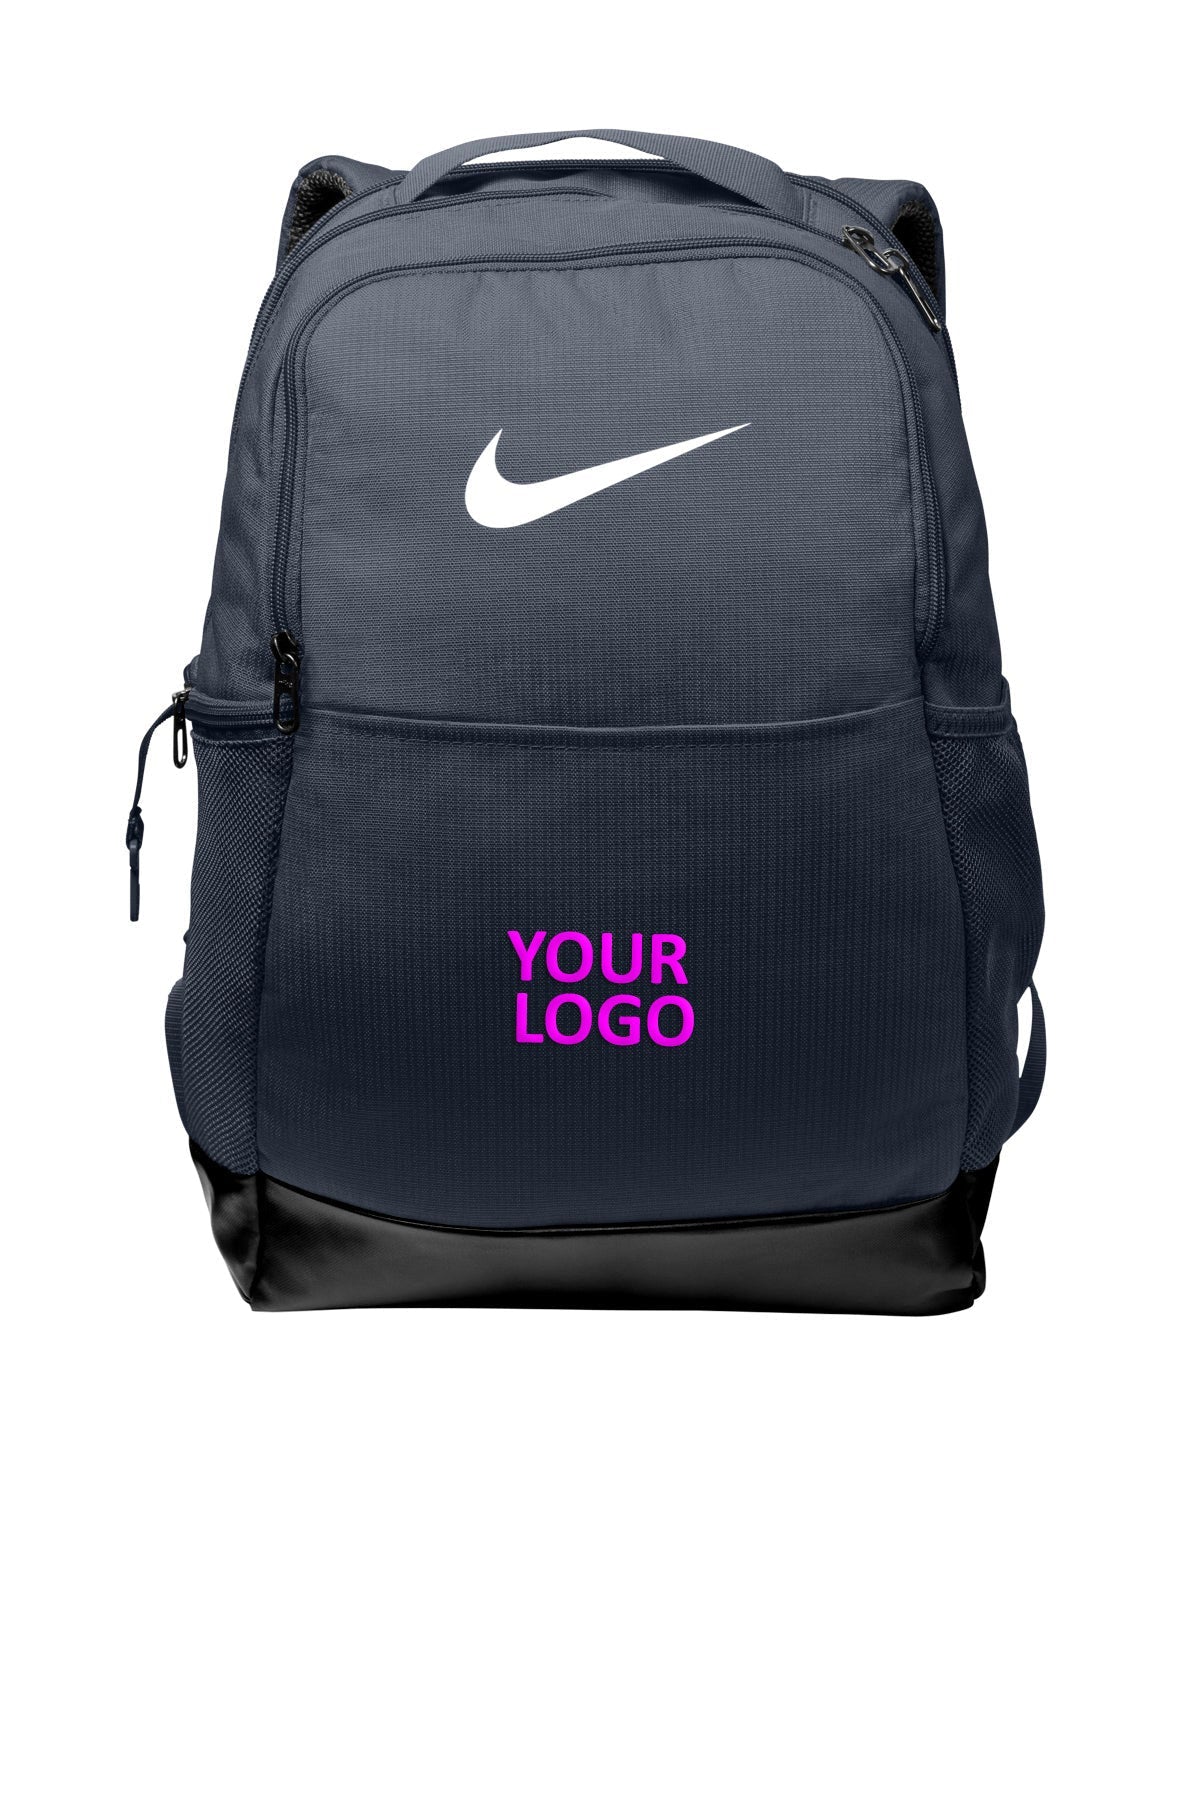 Nike Brasilia Medium Backpack NKDH7709 